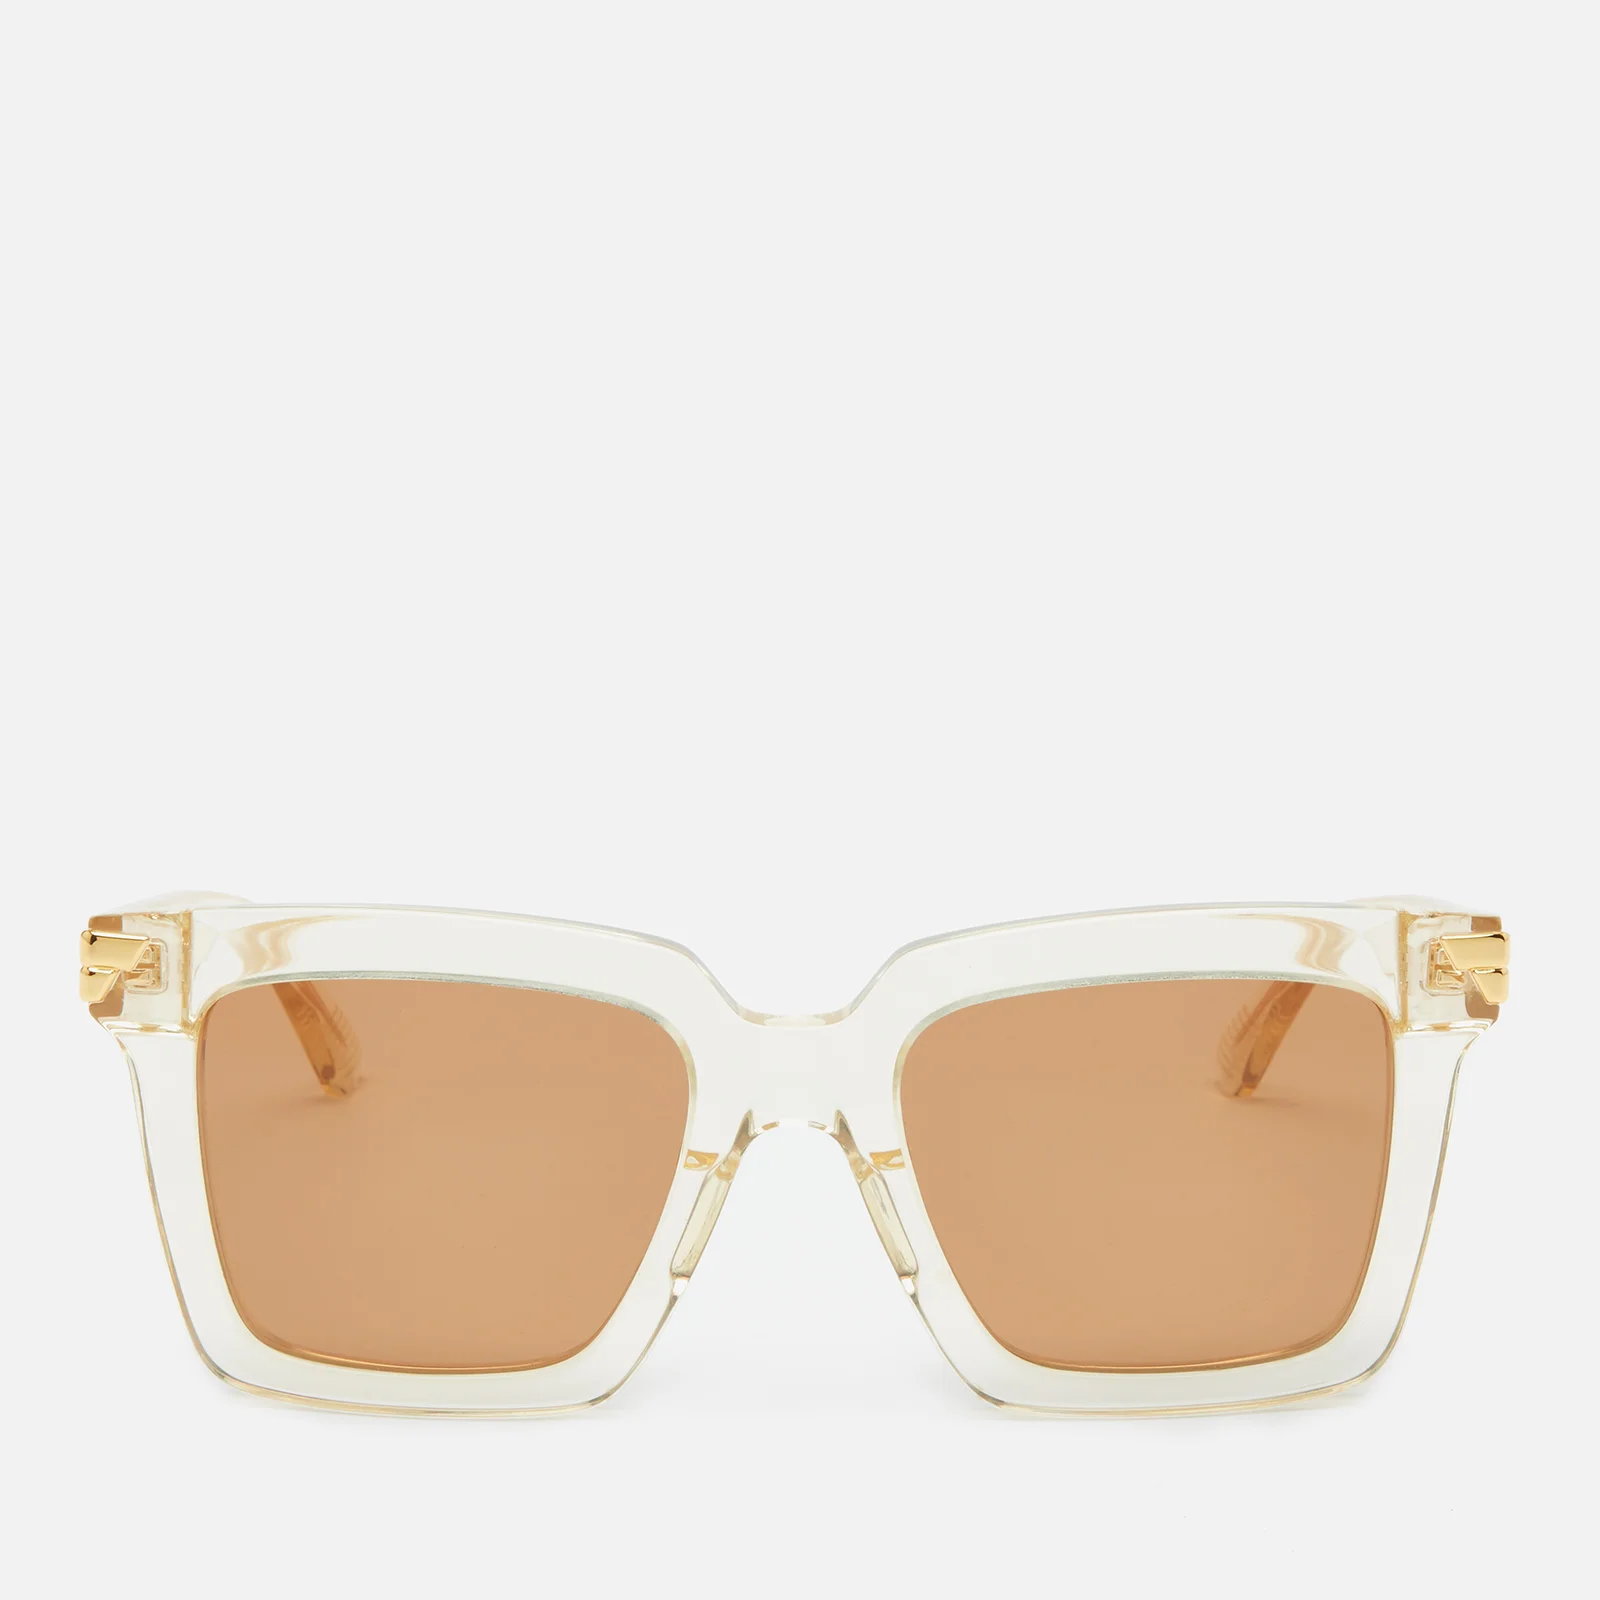 Bottega Veneta Women's D-Frame Acetate Sunglasses - Beige/Brown Image 1